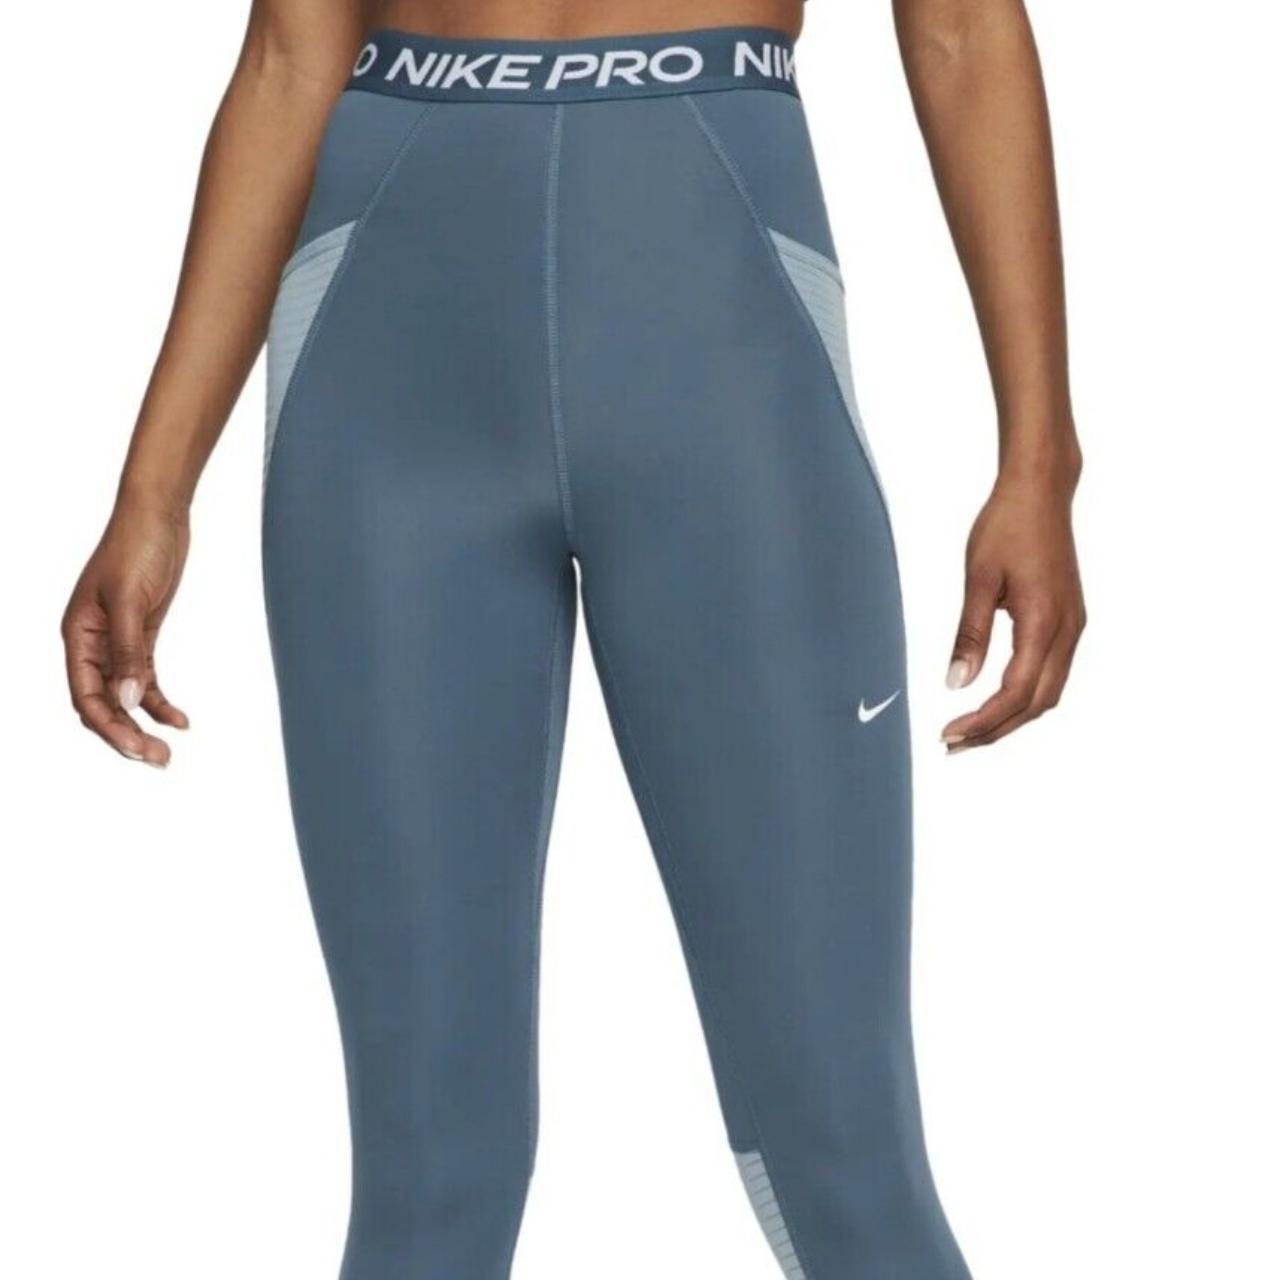 Nike / Women's Pro Tights